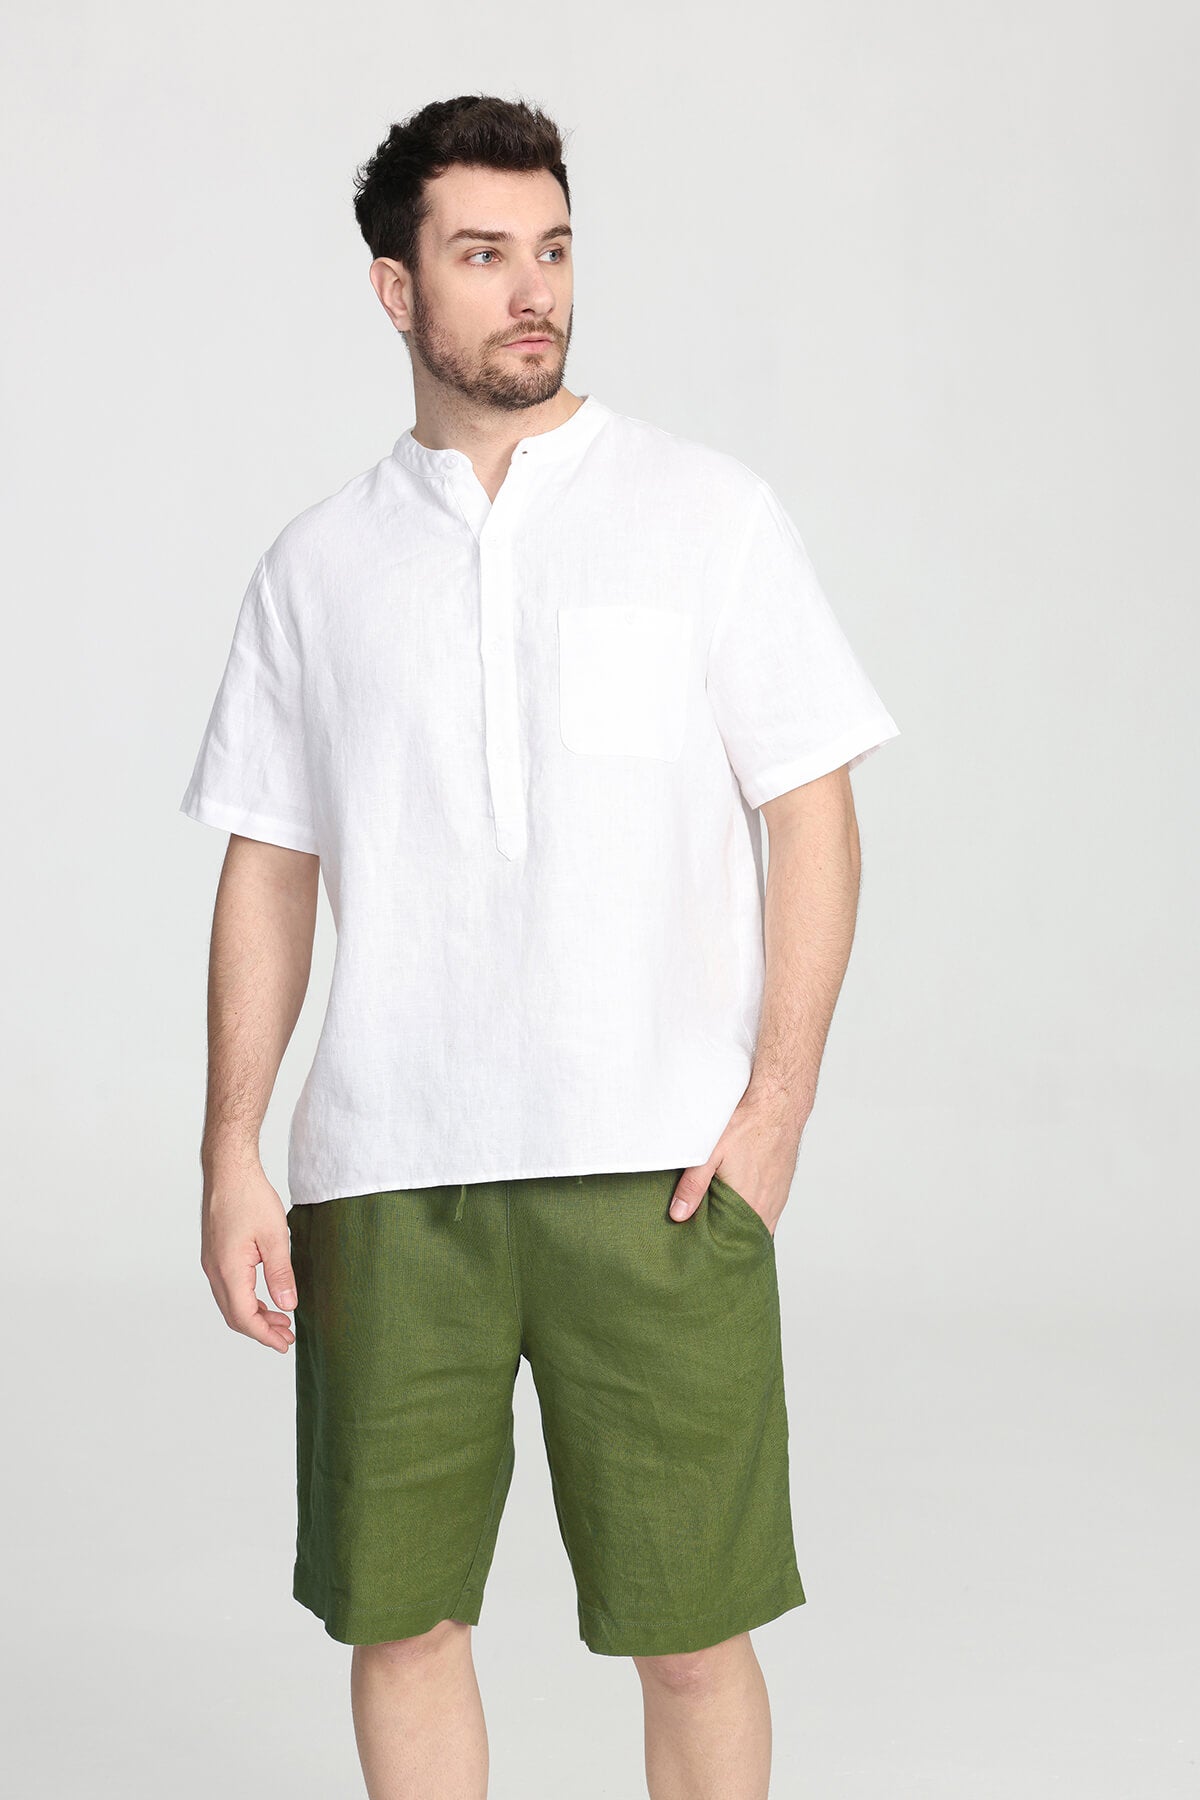 Ecoer- Men's Eco Organic Linen White Shirt 100% Organic Linen Clothing Short  Sleeve Shirt for Men – Ecoer Fashion